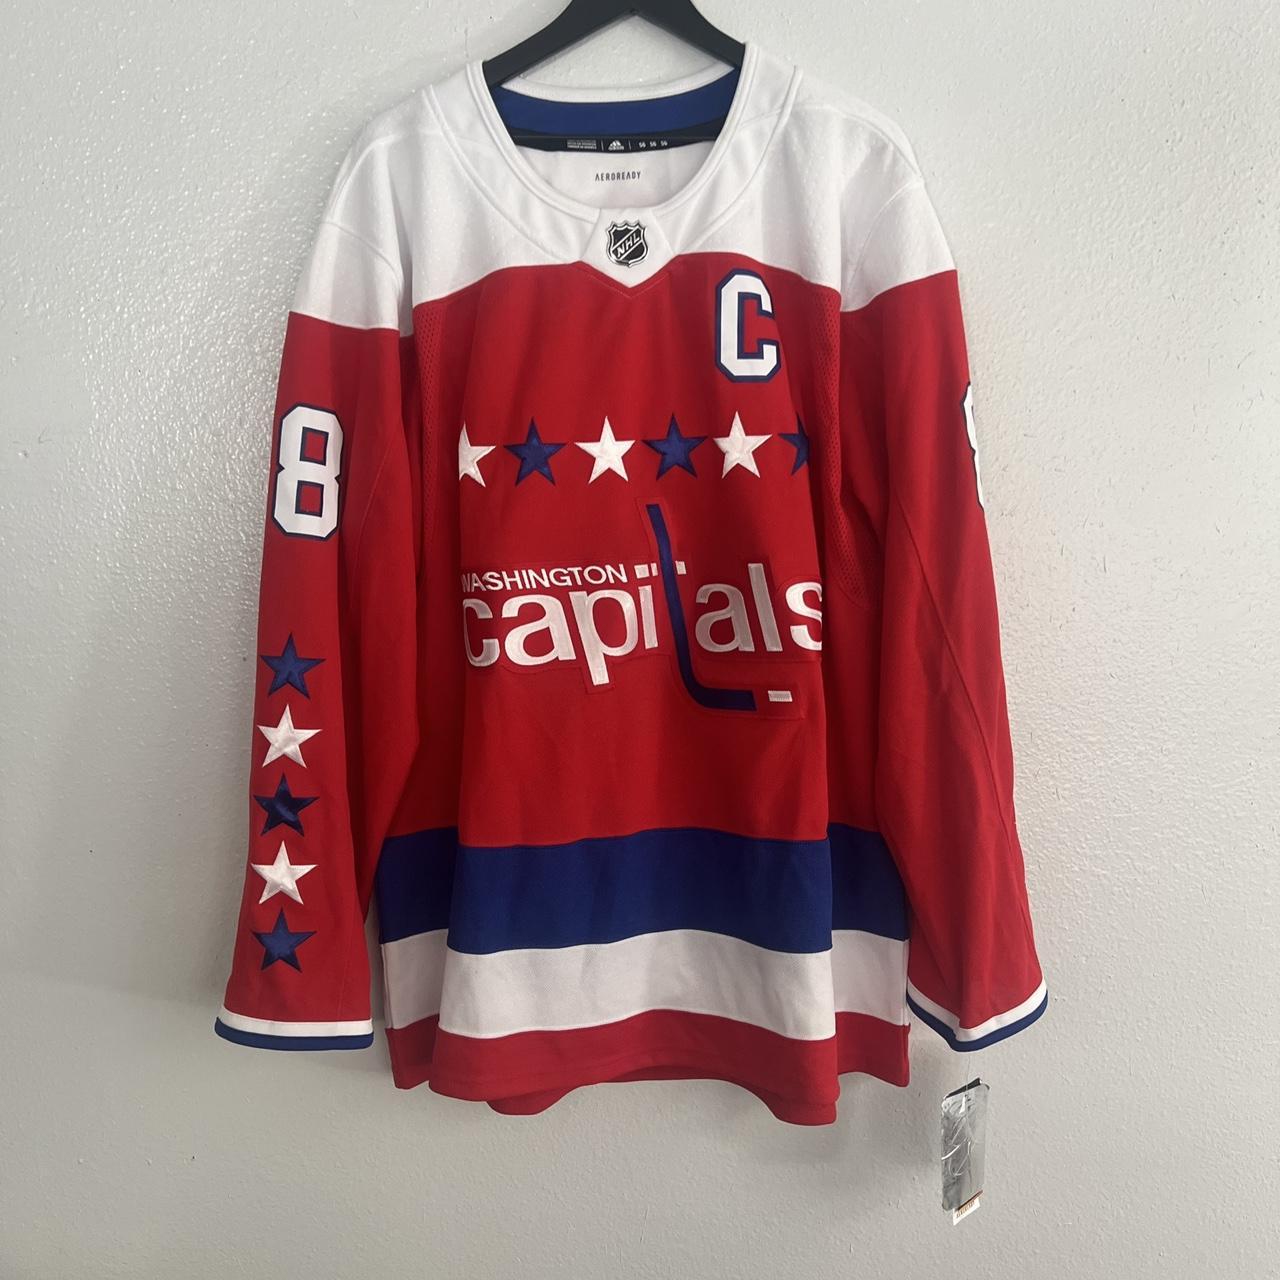 Washington Capitals Adidas Authentic Third Alternate NHL Hockey